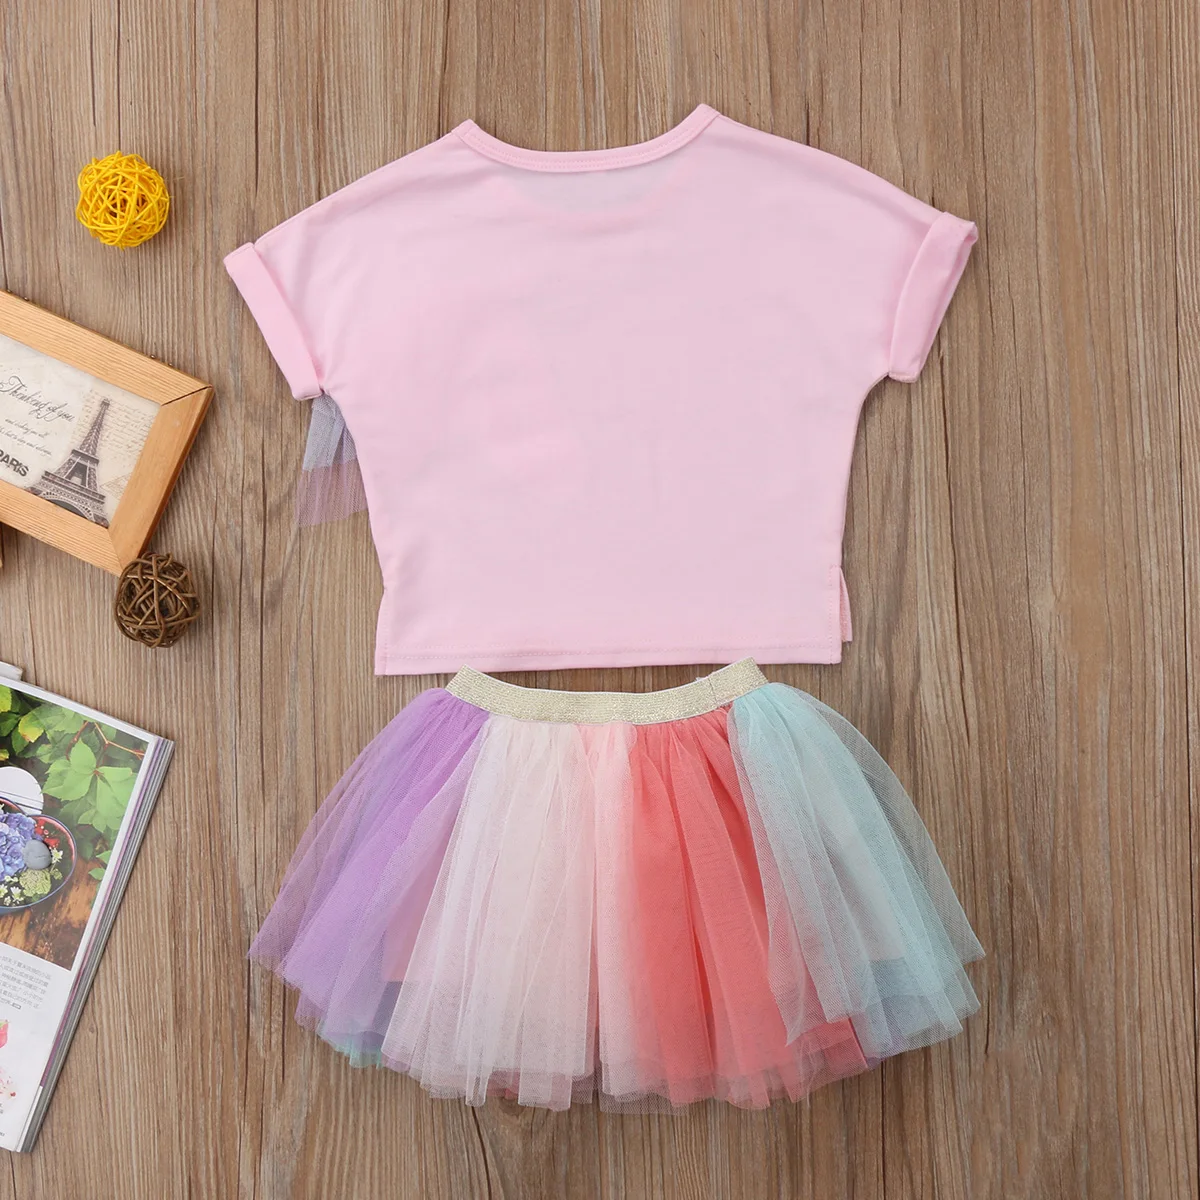 for Baby Toddler Girl Clothing Set Short Sleeve Unicorn Tee Shirt and Colorful Tutu